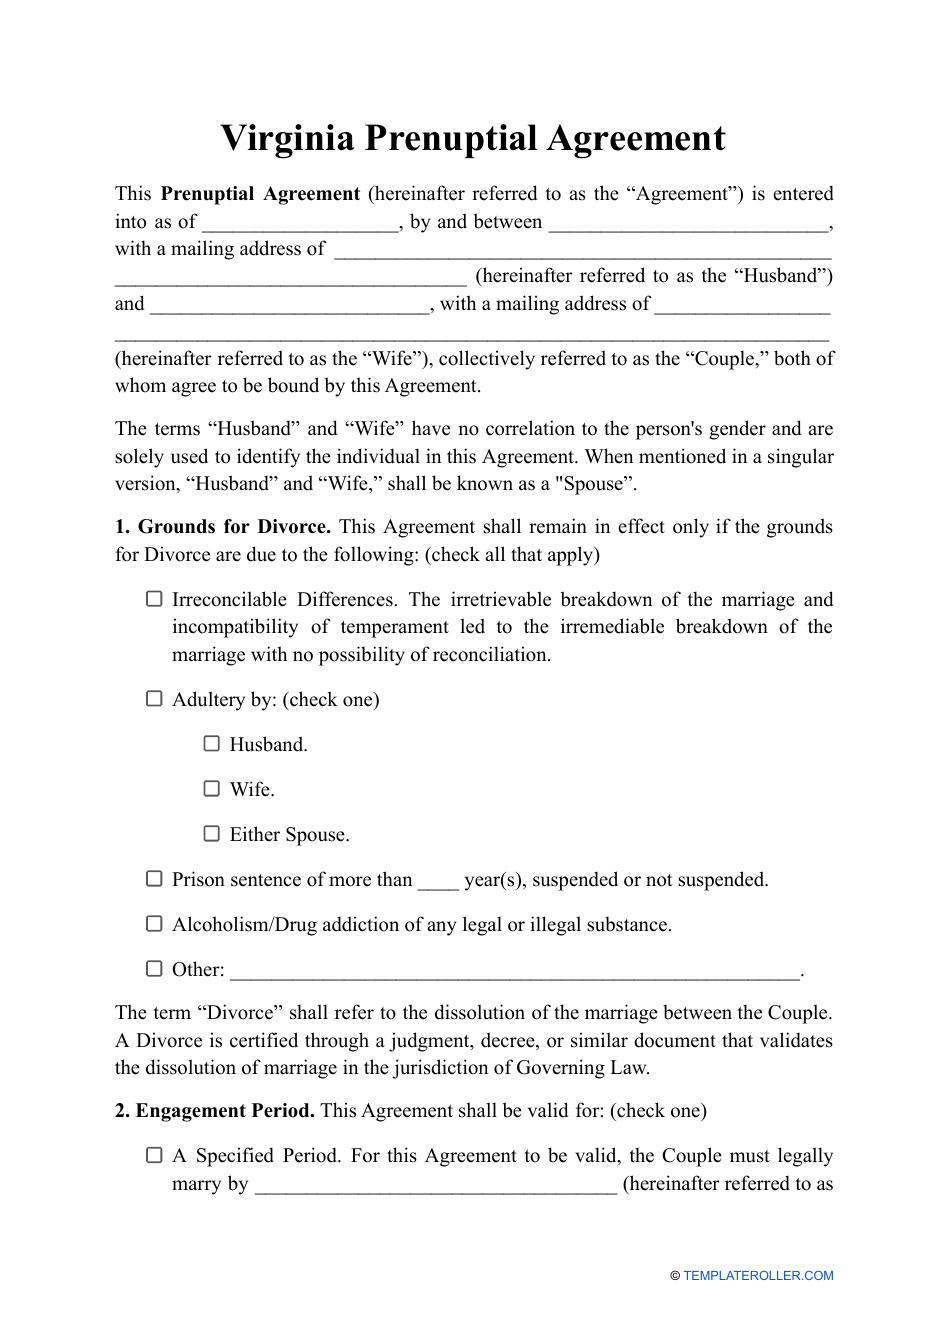 Prenuptial Agreement Template - Virginia, Page 1